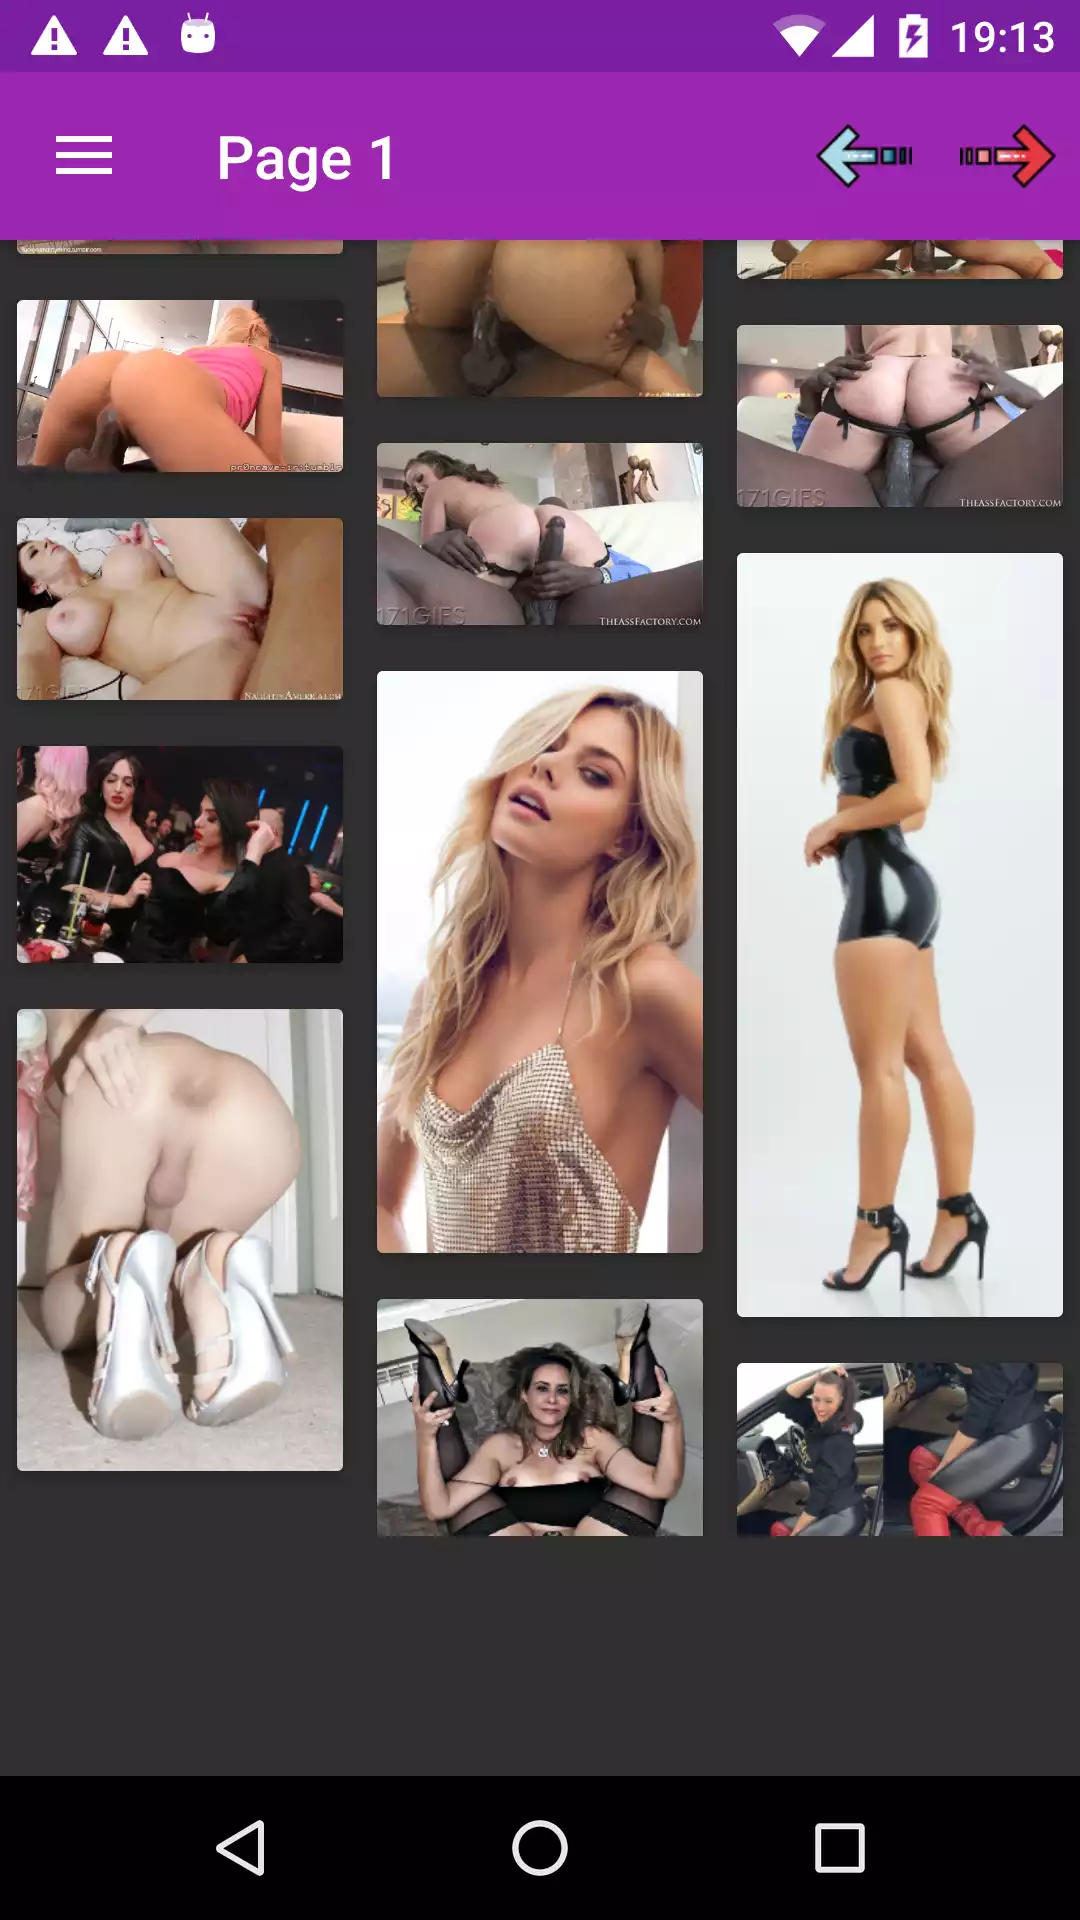 Sexy Group Sex Pics browser,gallery,hentai,adult,pornstar,download,aplikasi,apk,lisa,photos,mature,pics,android,app,porn,sexy,pictures,manga,henti